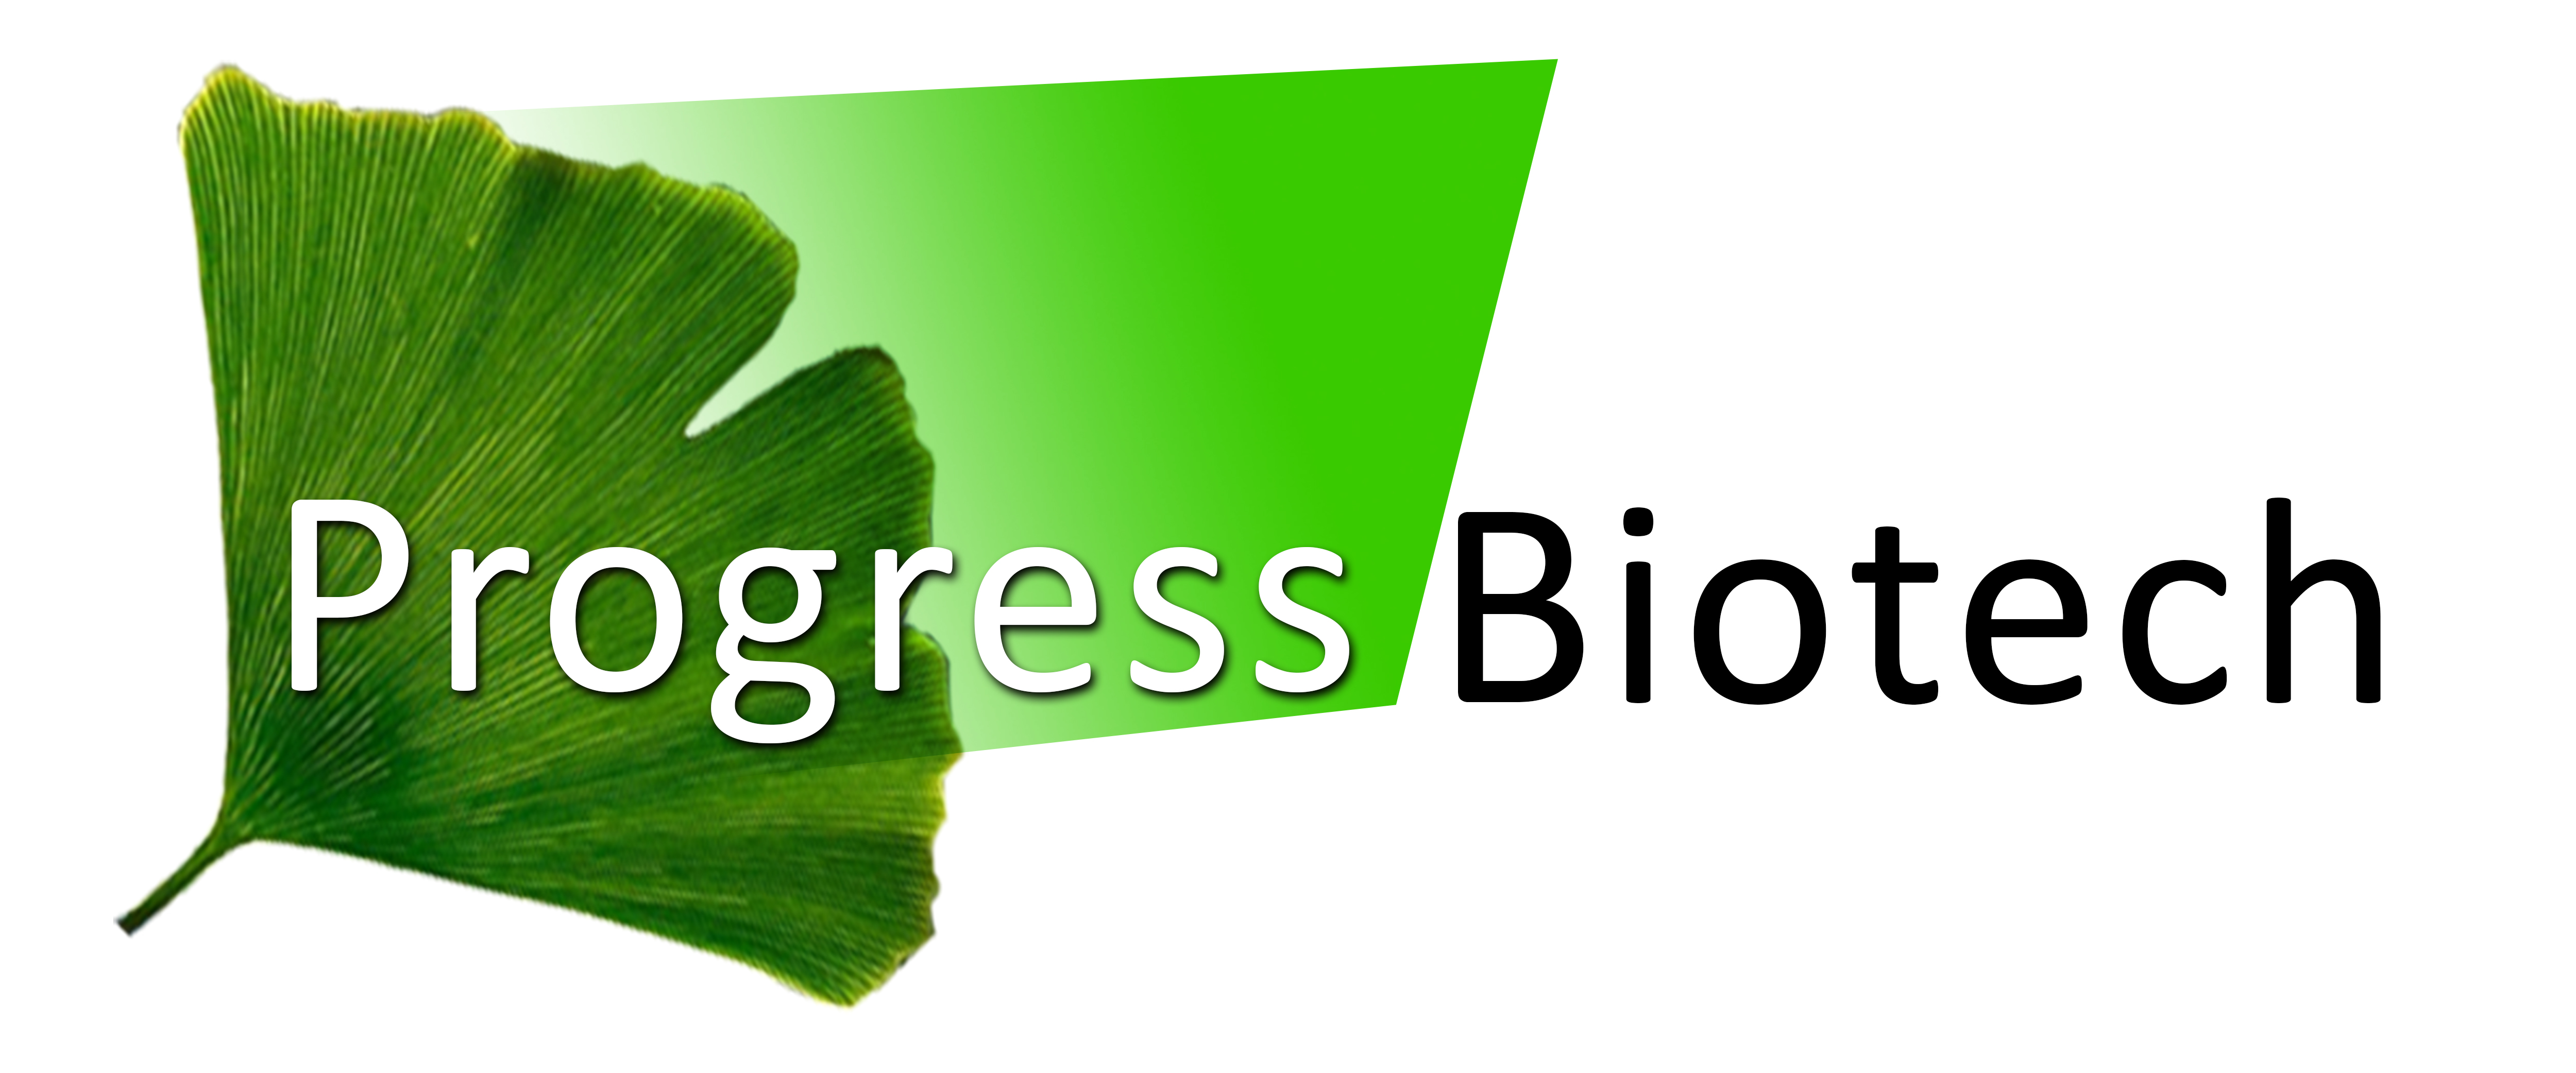 Progress Biotech